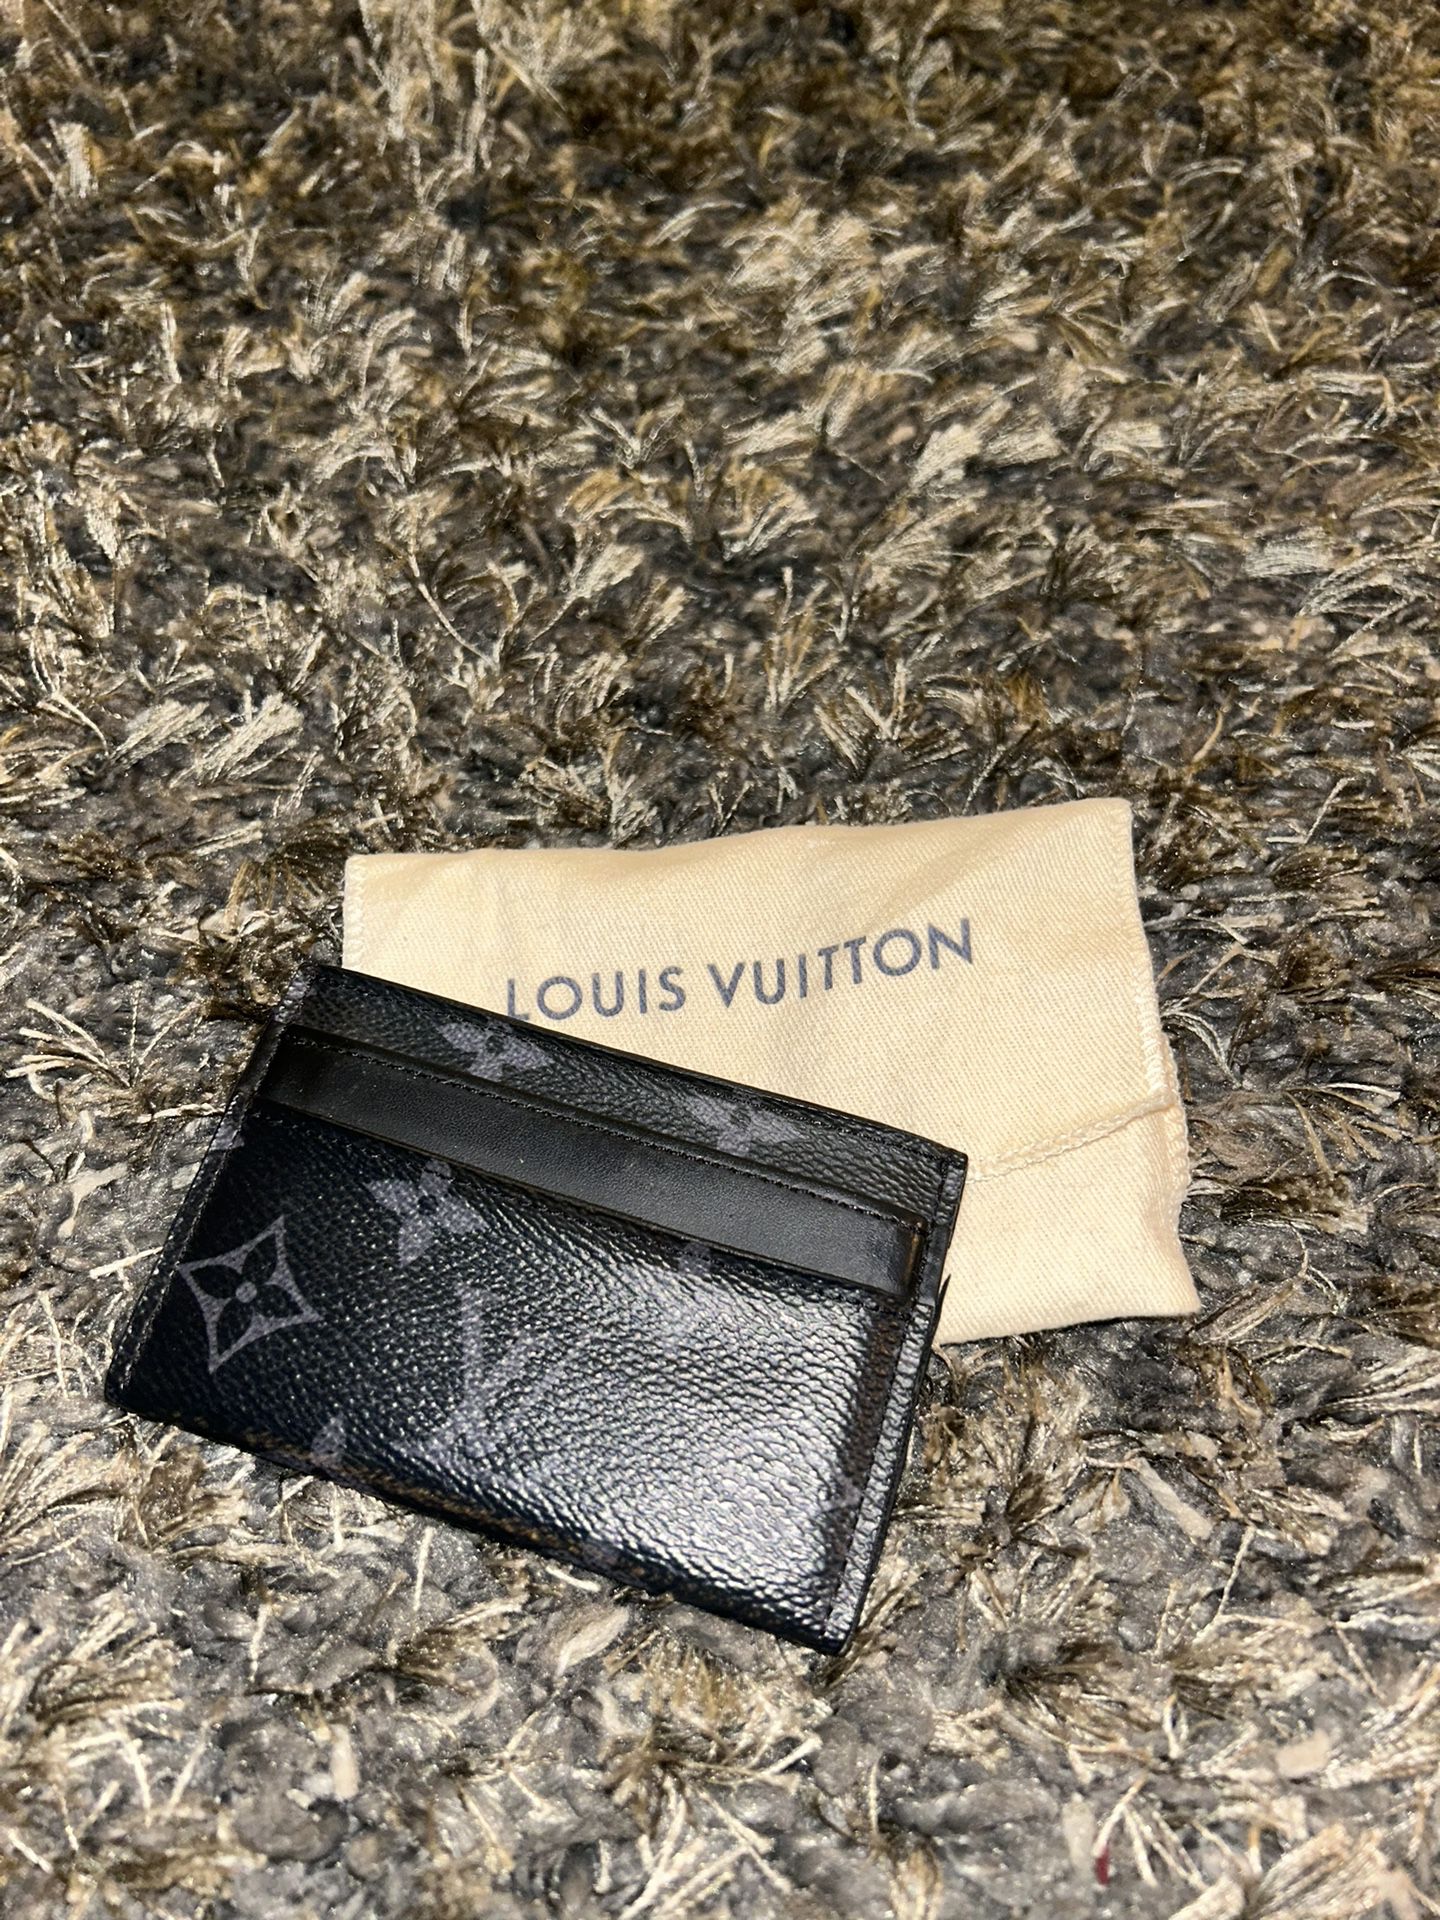 Men’s Louis Vuitton Card Holder